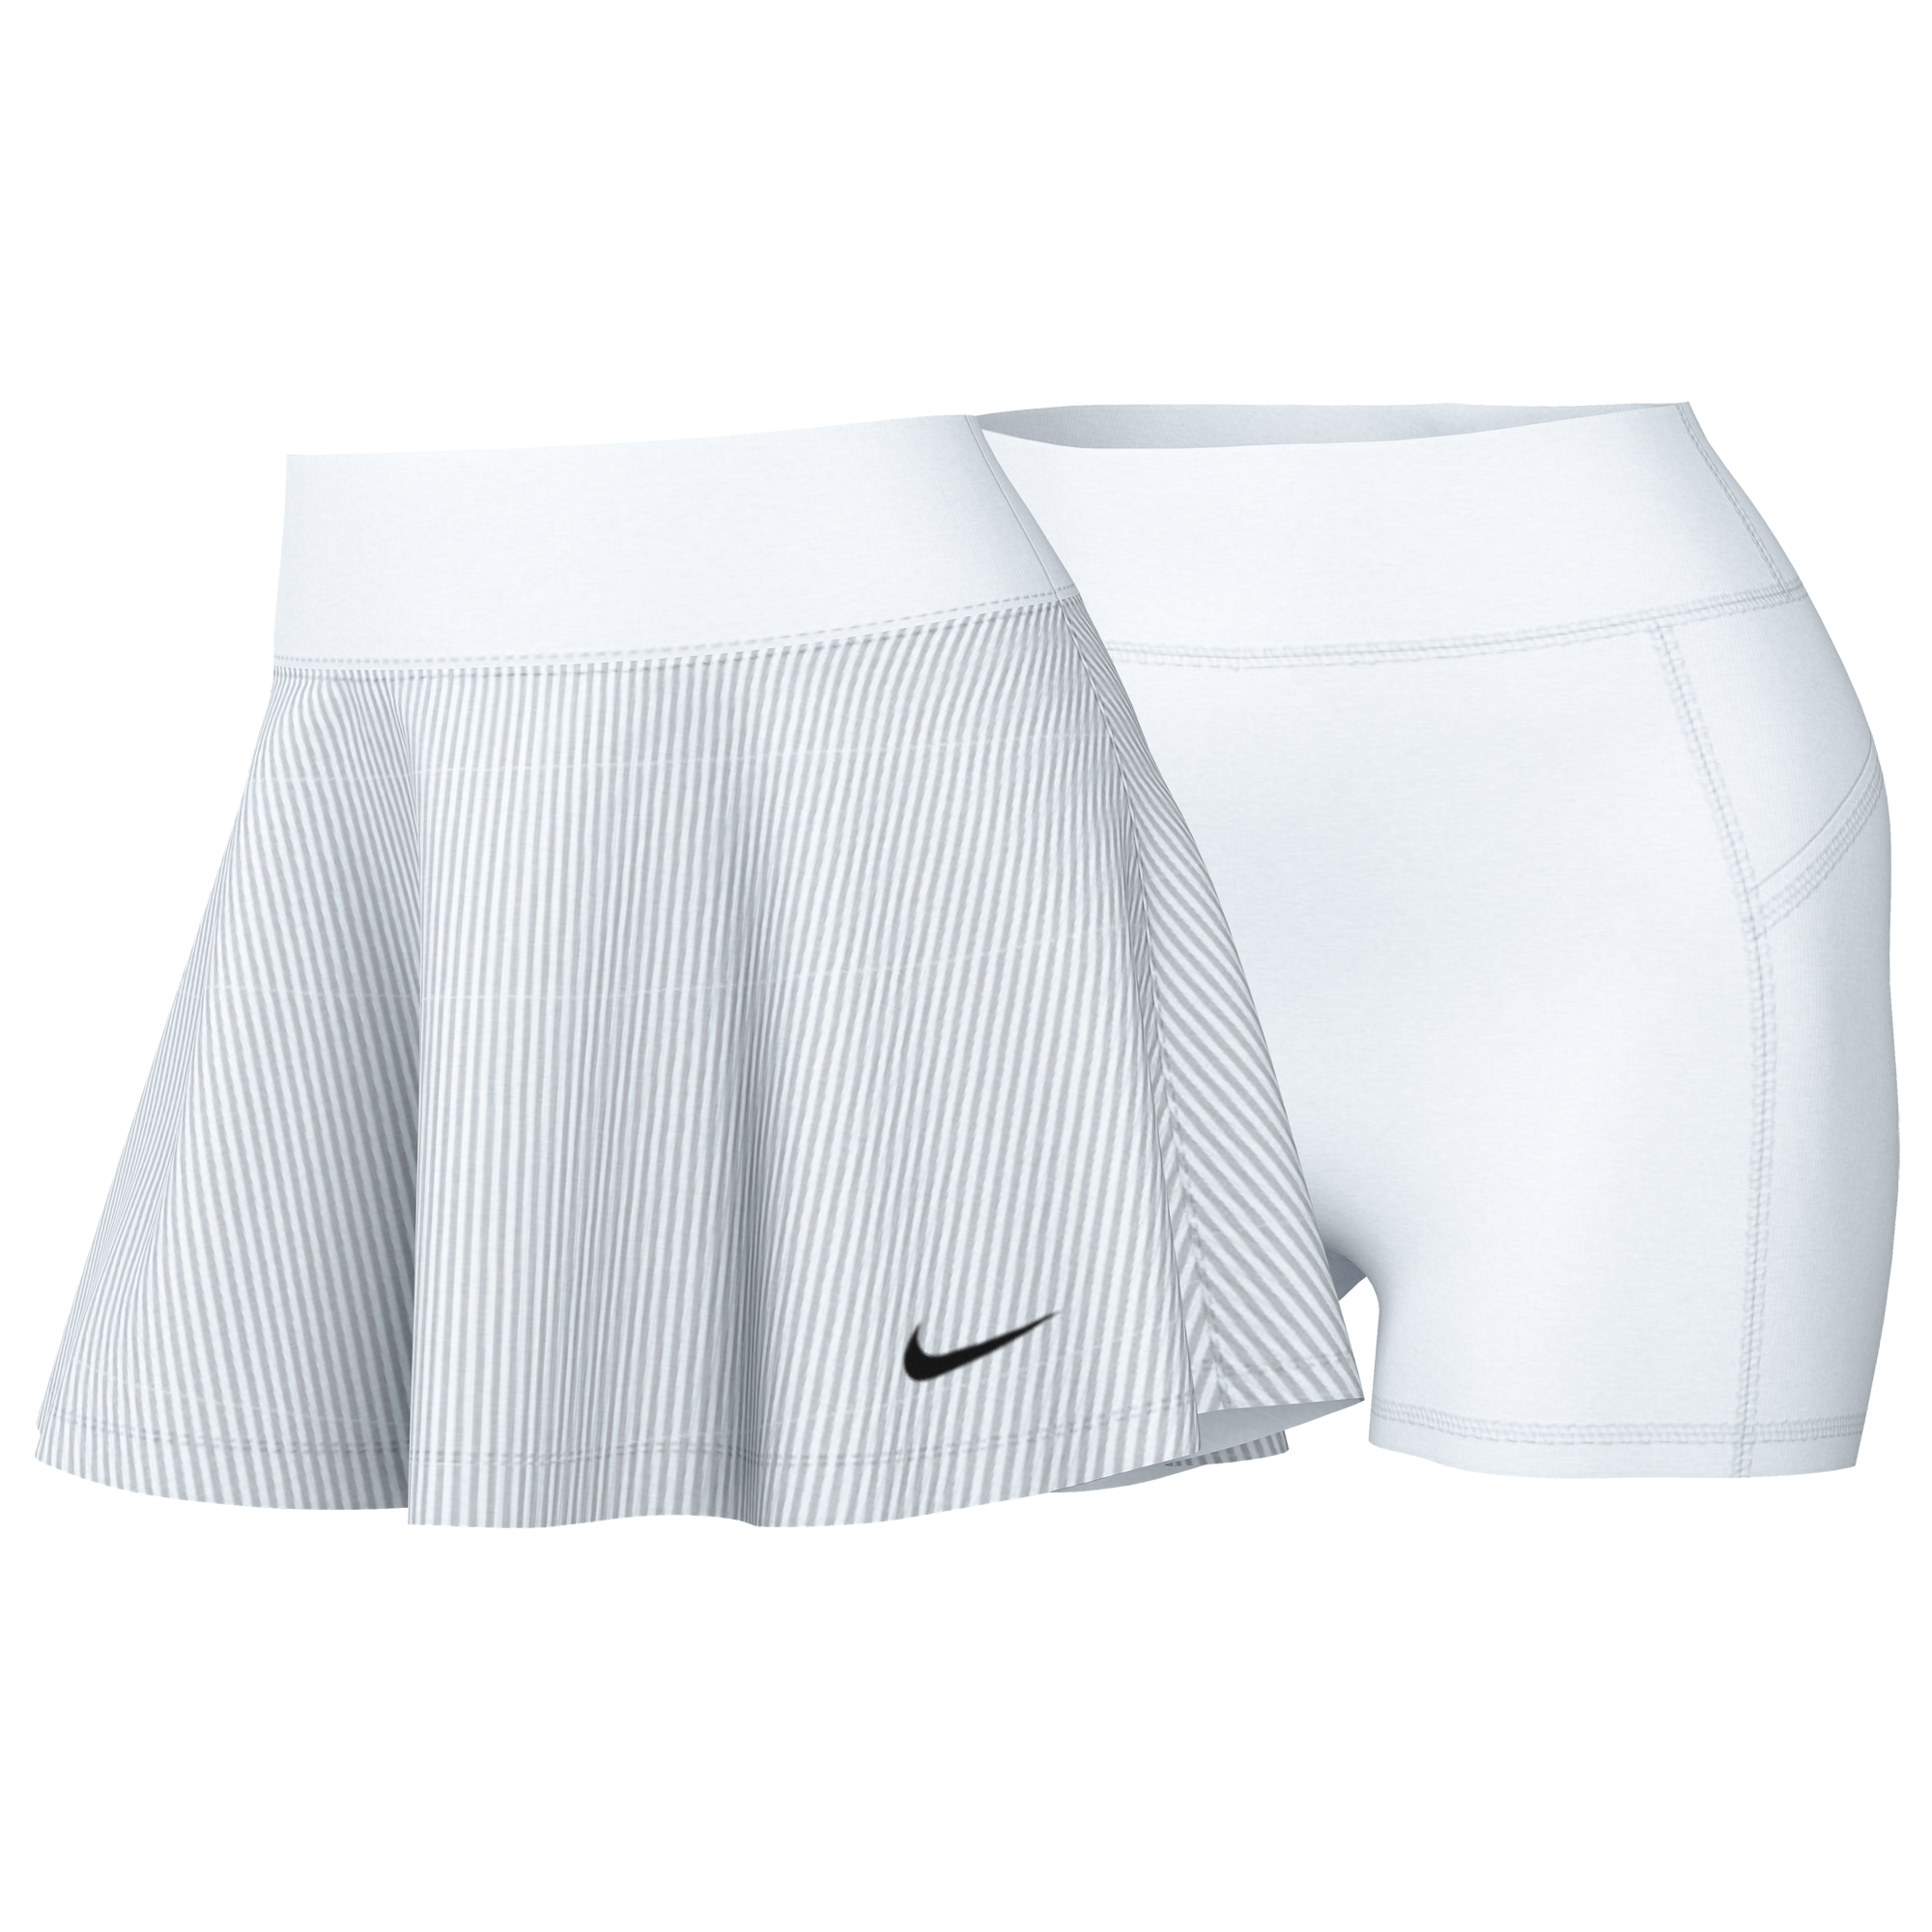 Nike Court Advantage Tennis Skirt (Women's) - White/Black